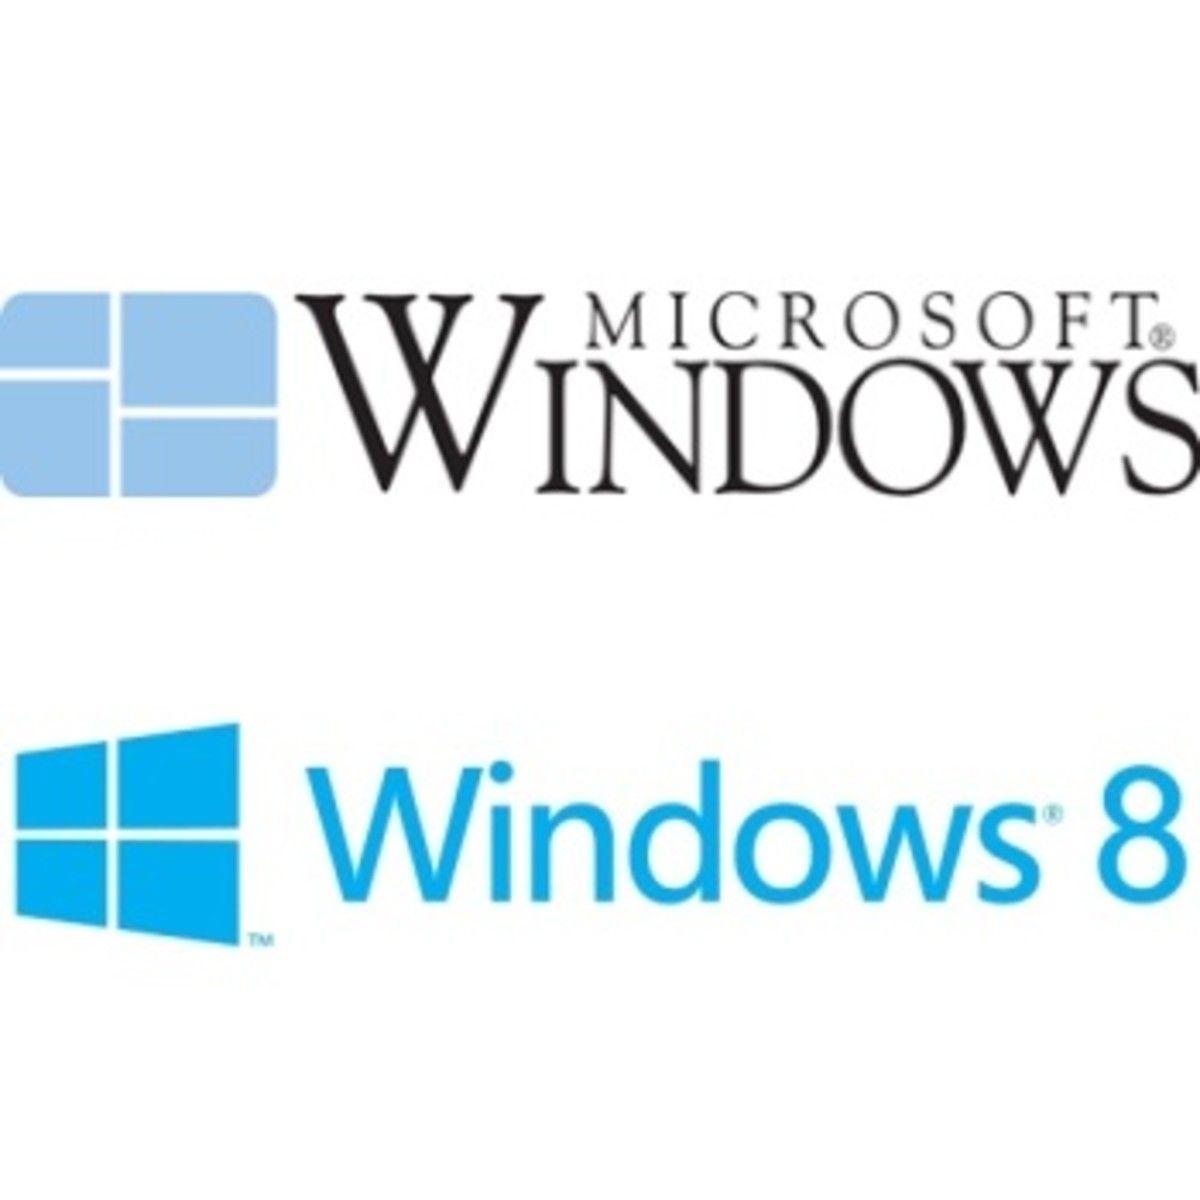 Microsoft Windows 8 Logo - Microsoft unveils Windows 8 logo - PC Retail